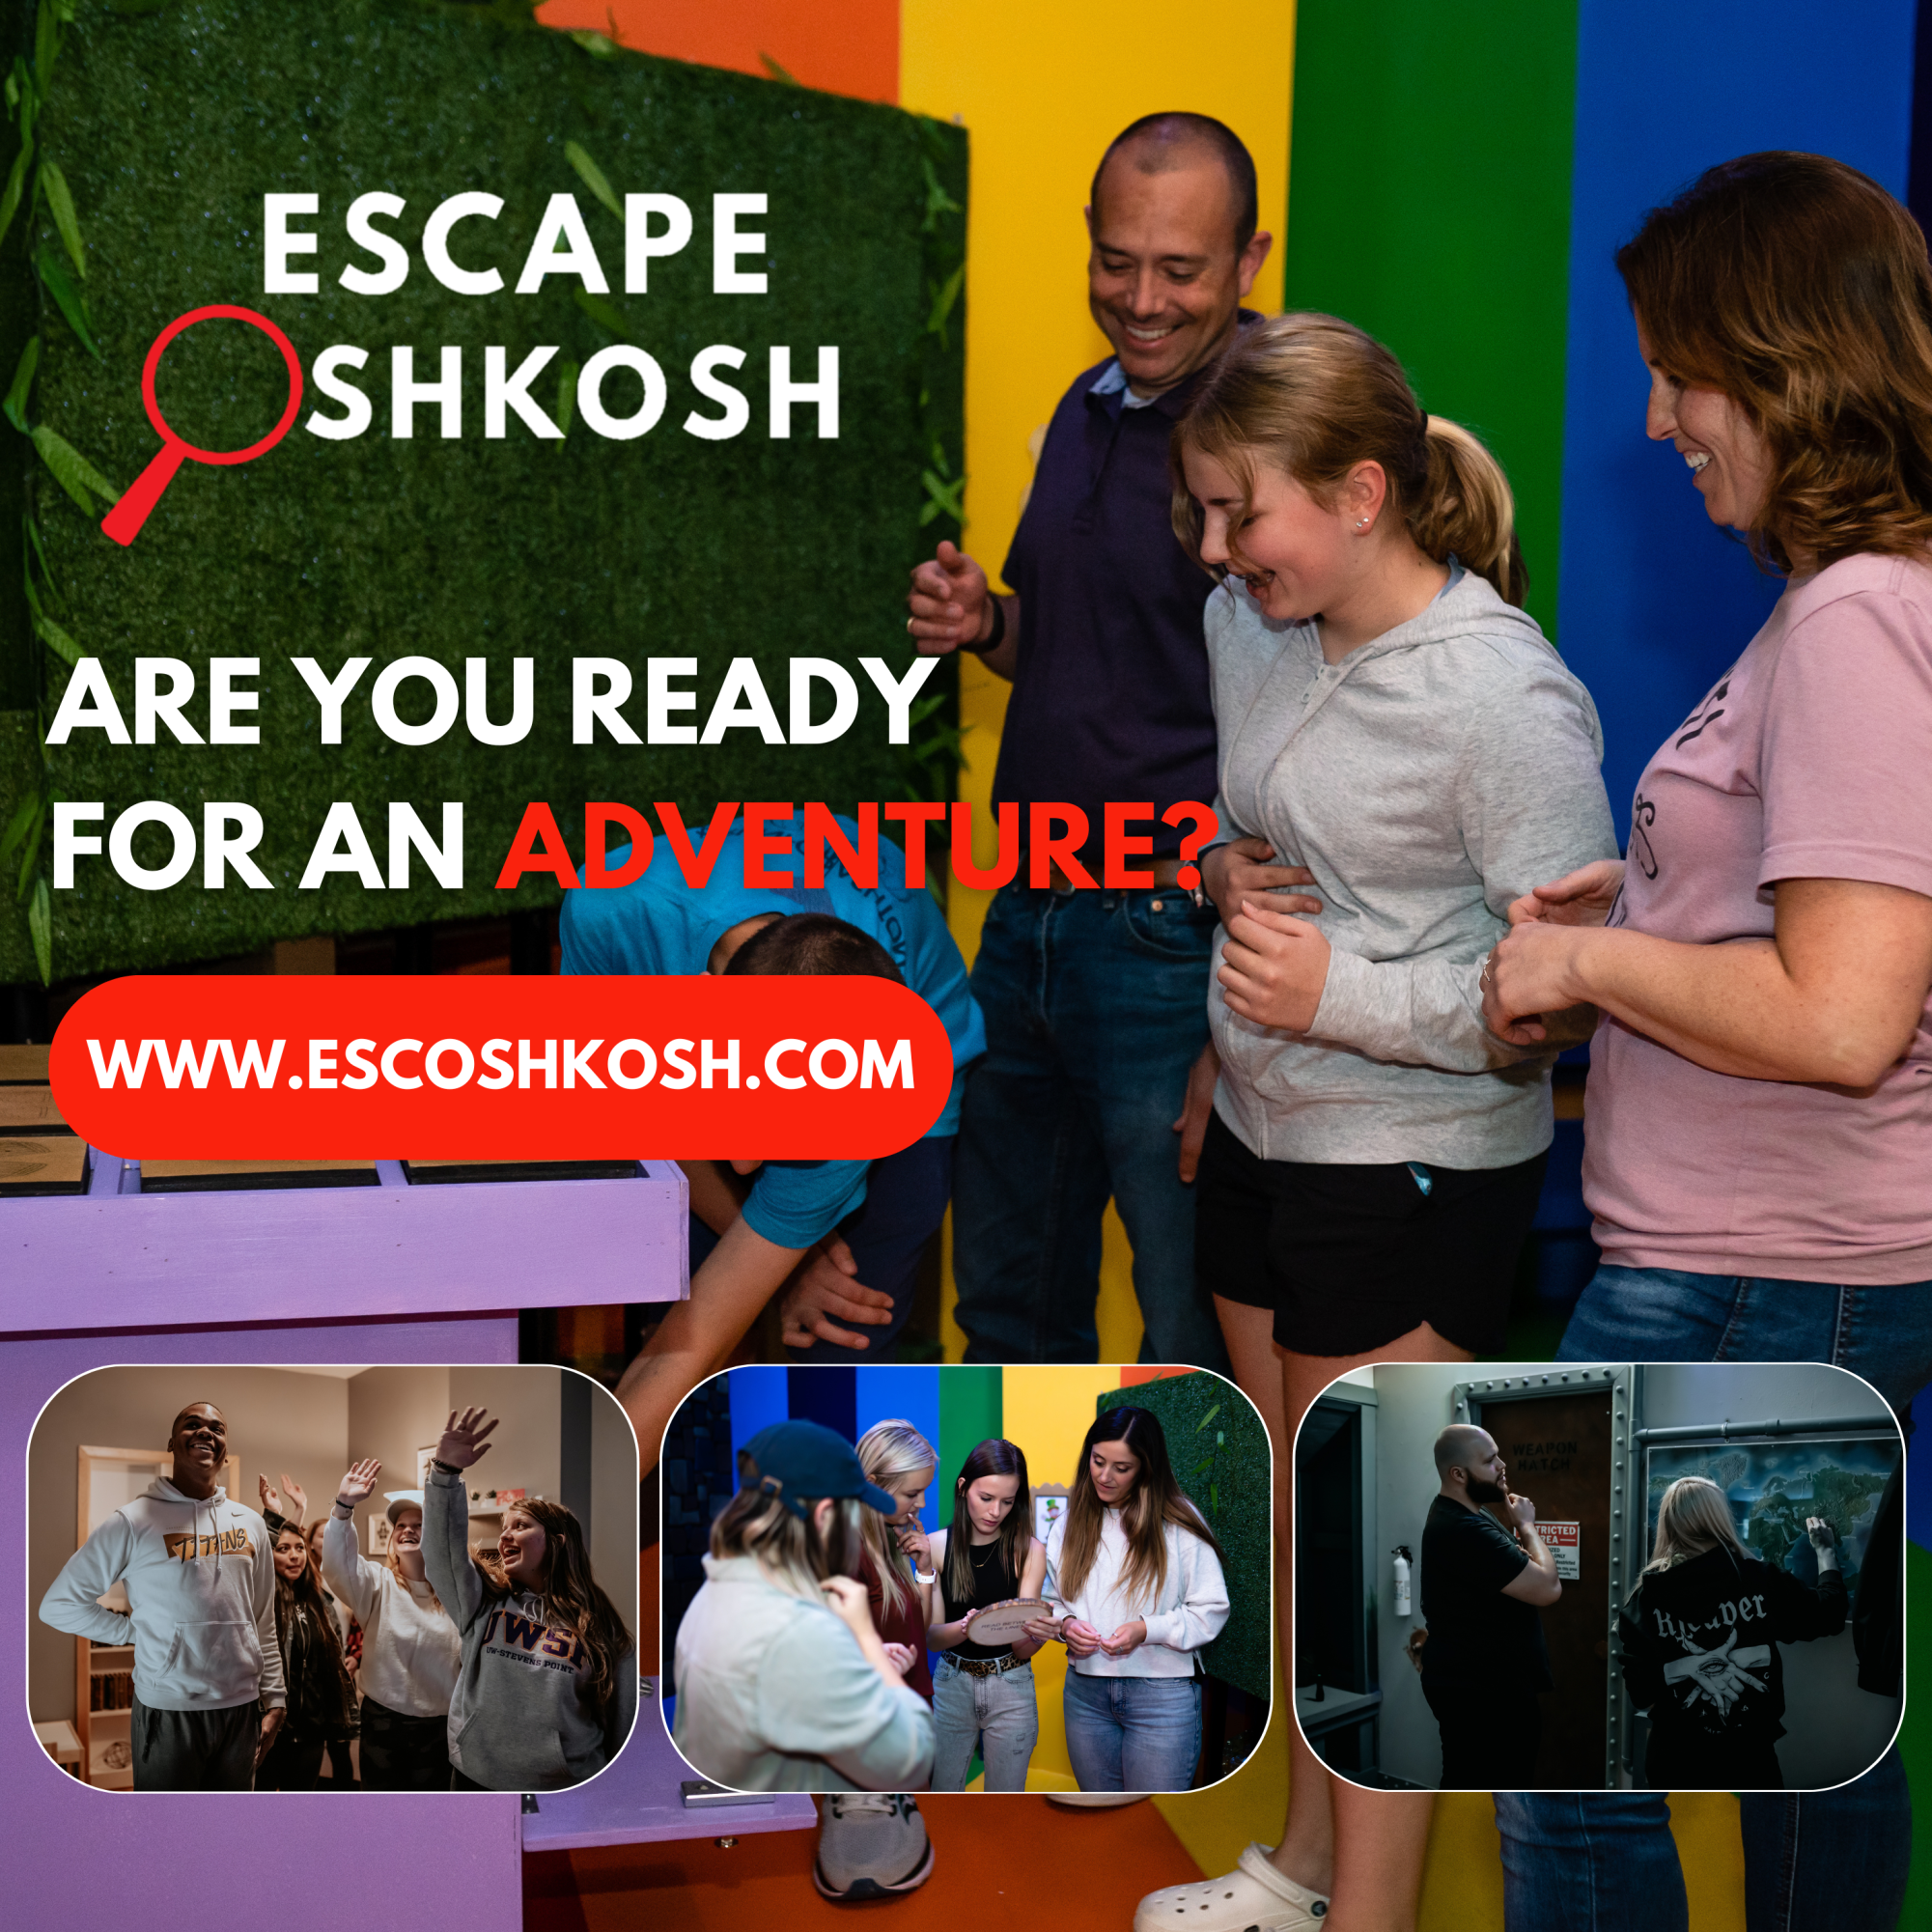 Escape Oshkosh